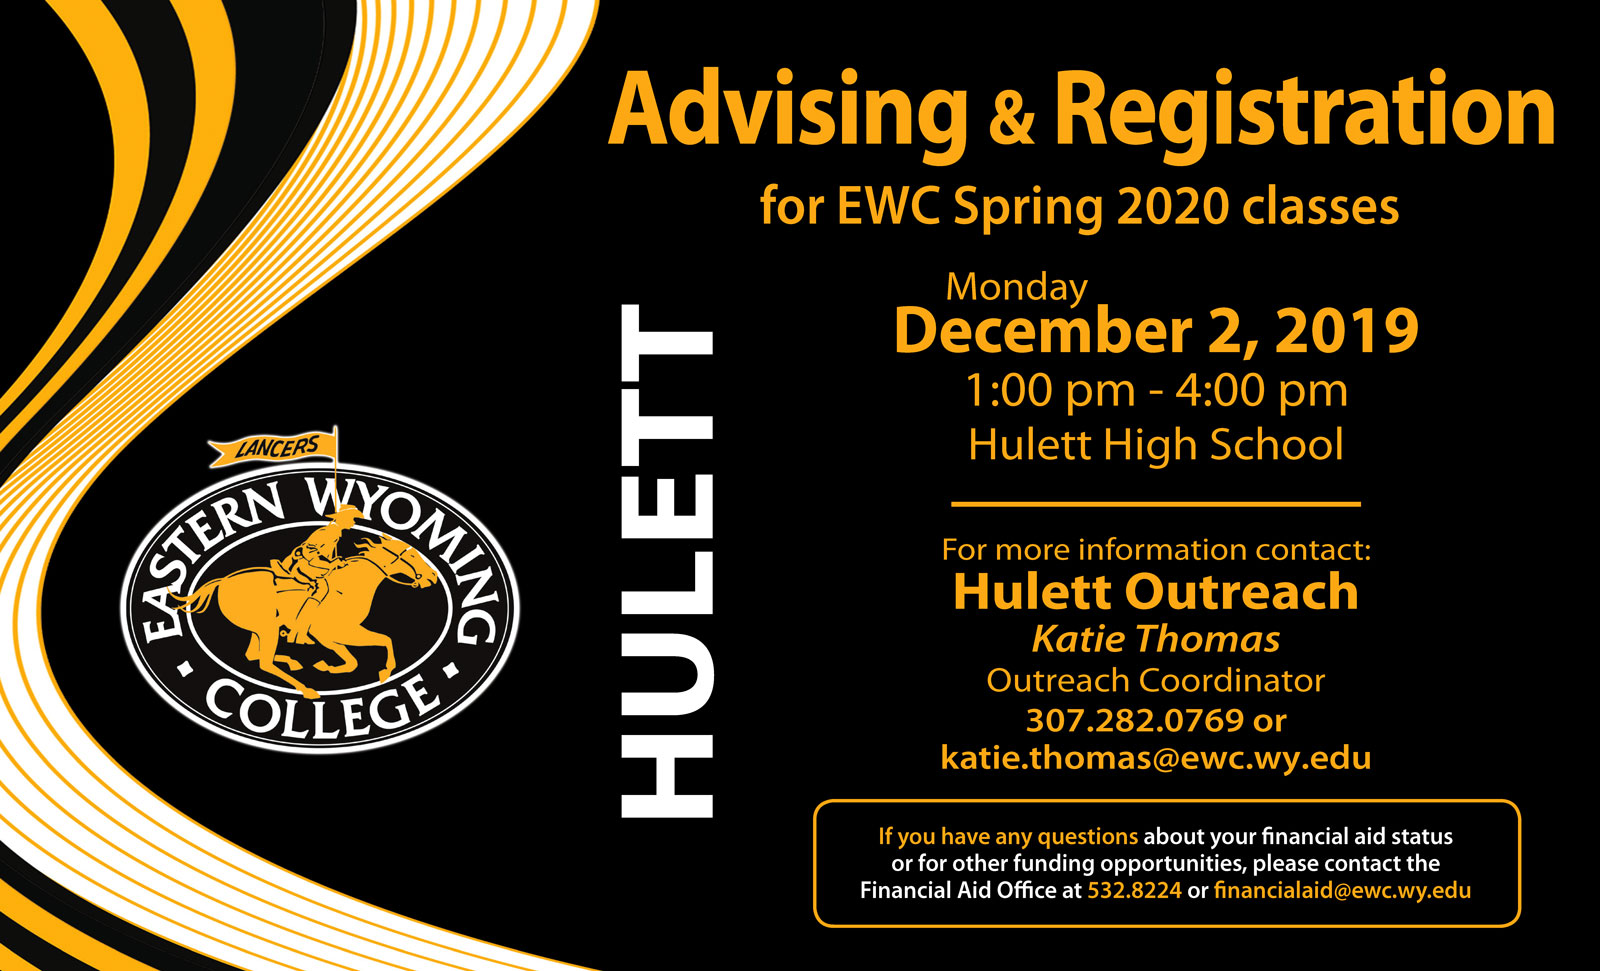 Advising & Registration for EWC Spring 2020 Classes - Hulett